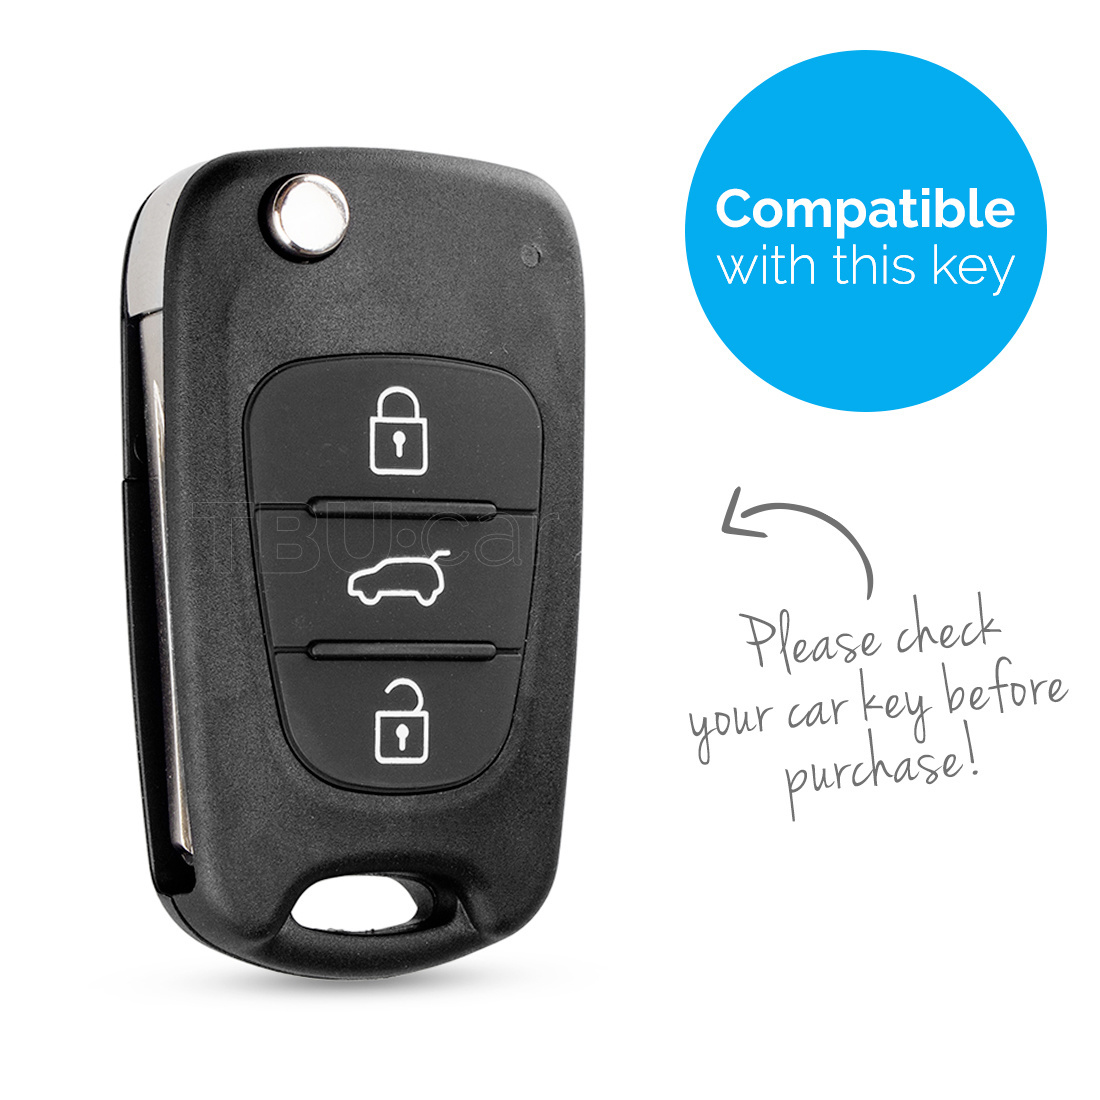 TBU car TBU car Sleutel cover compatibel met Hyundai - TPU sleutel hoesje / beschermhoesje autosleutel - Roségoud